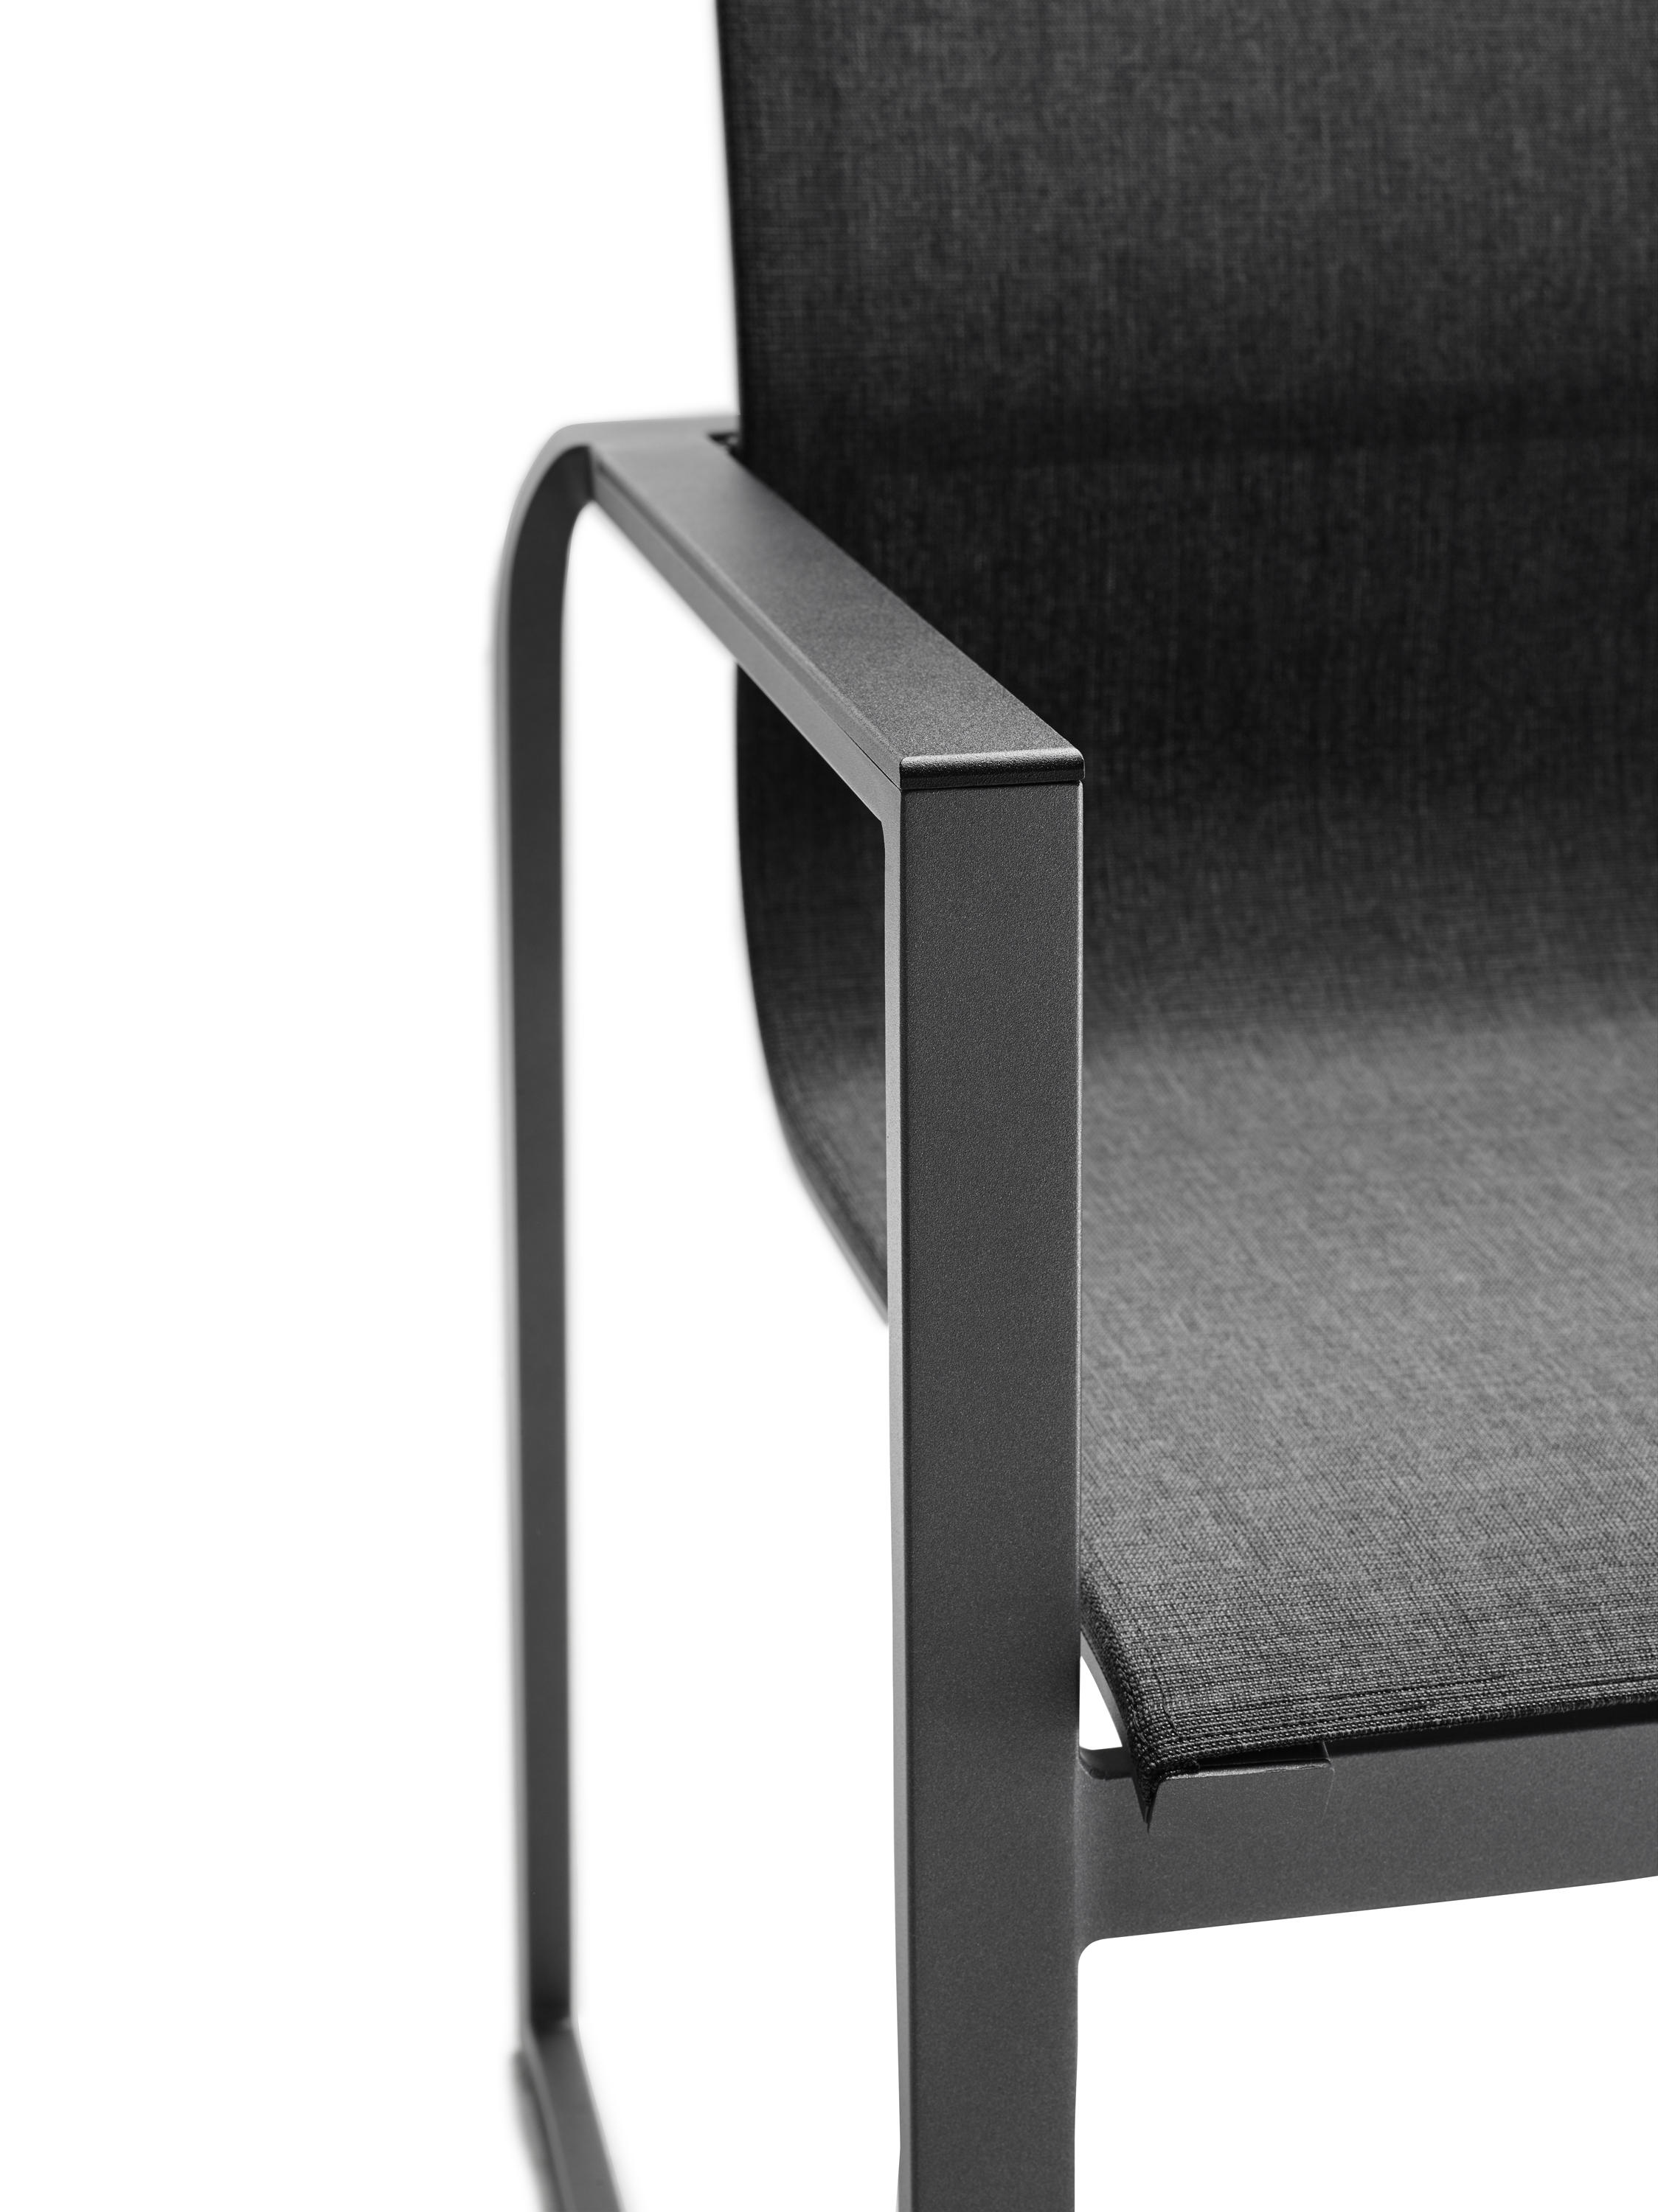 Foxx Stacking Chair Designer Furniture Architonic